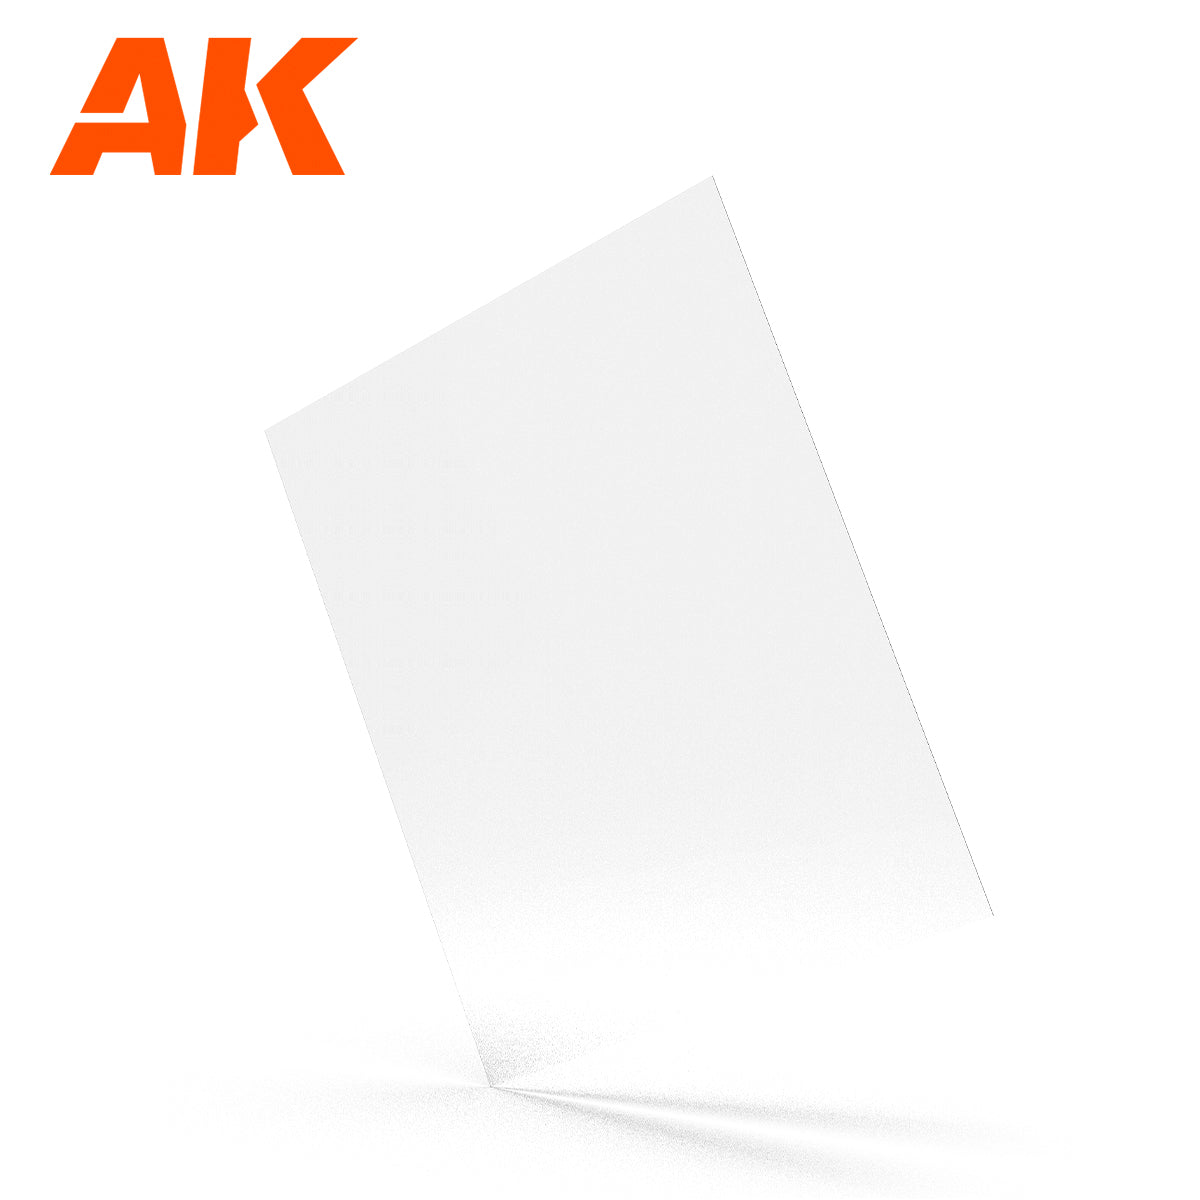 AK6577 - Styrene sheet - 1,5mm thickness x 245 x 195mm